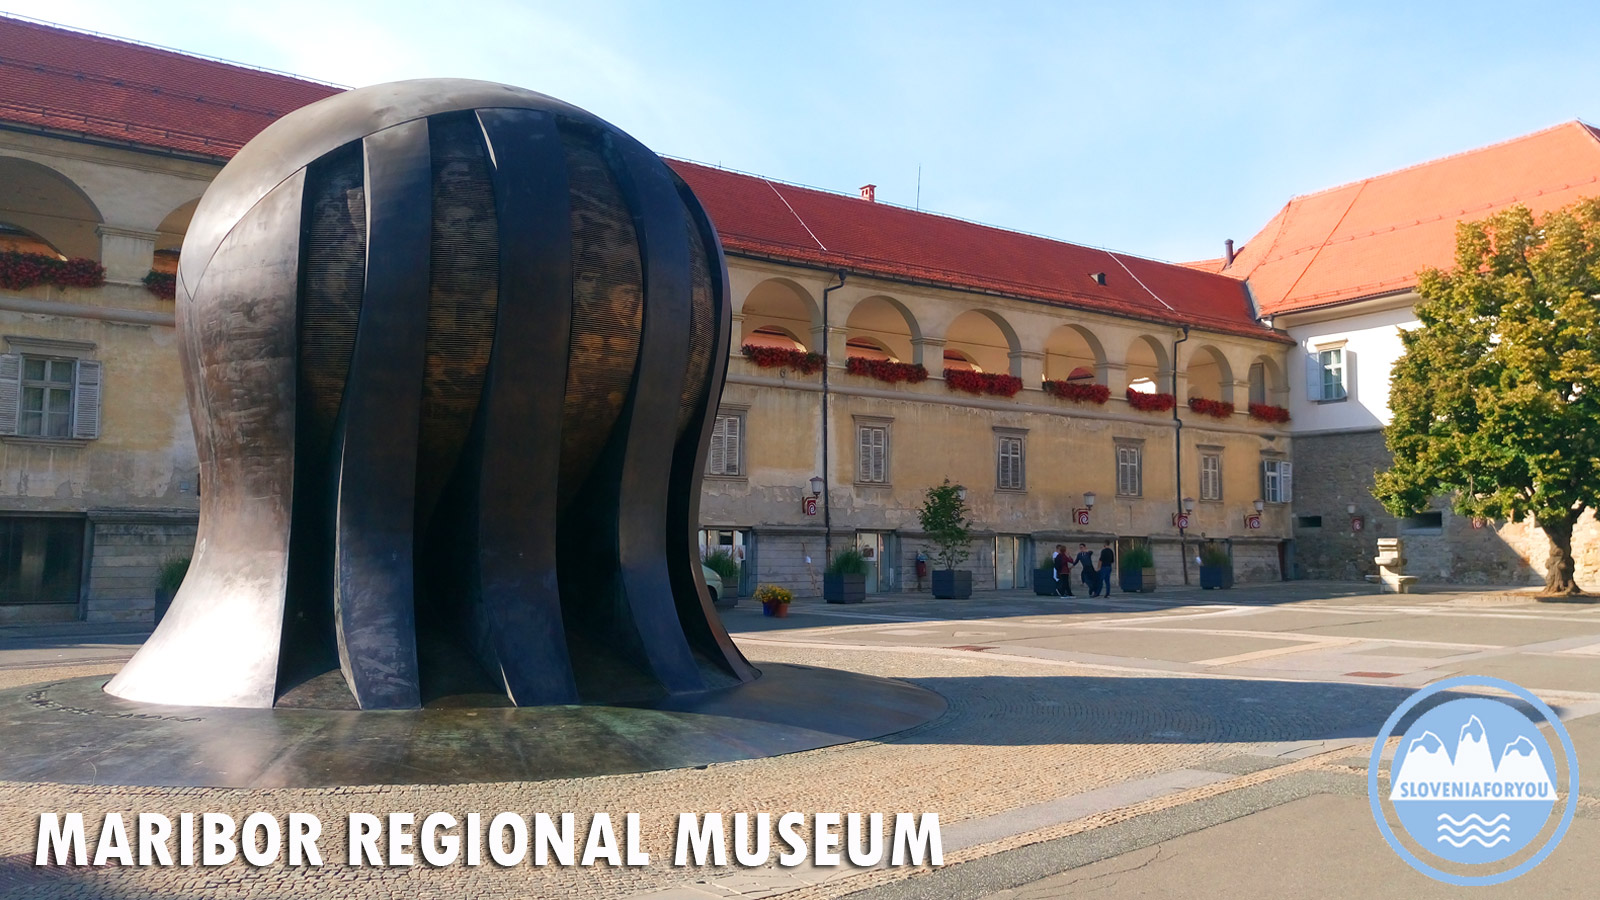 Regional Museum in Maribor, Sloveniaforyou